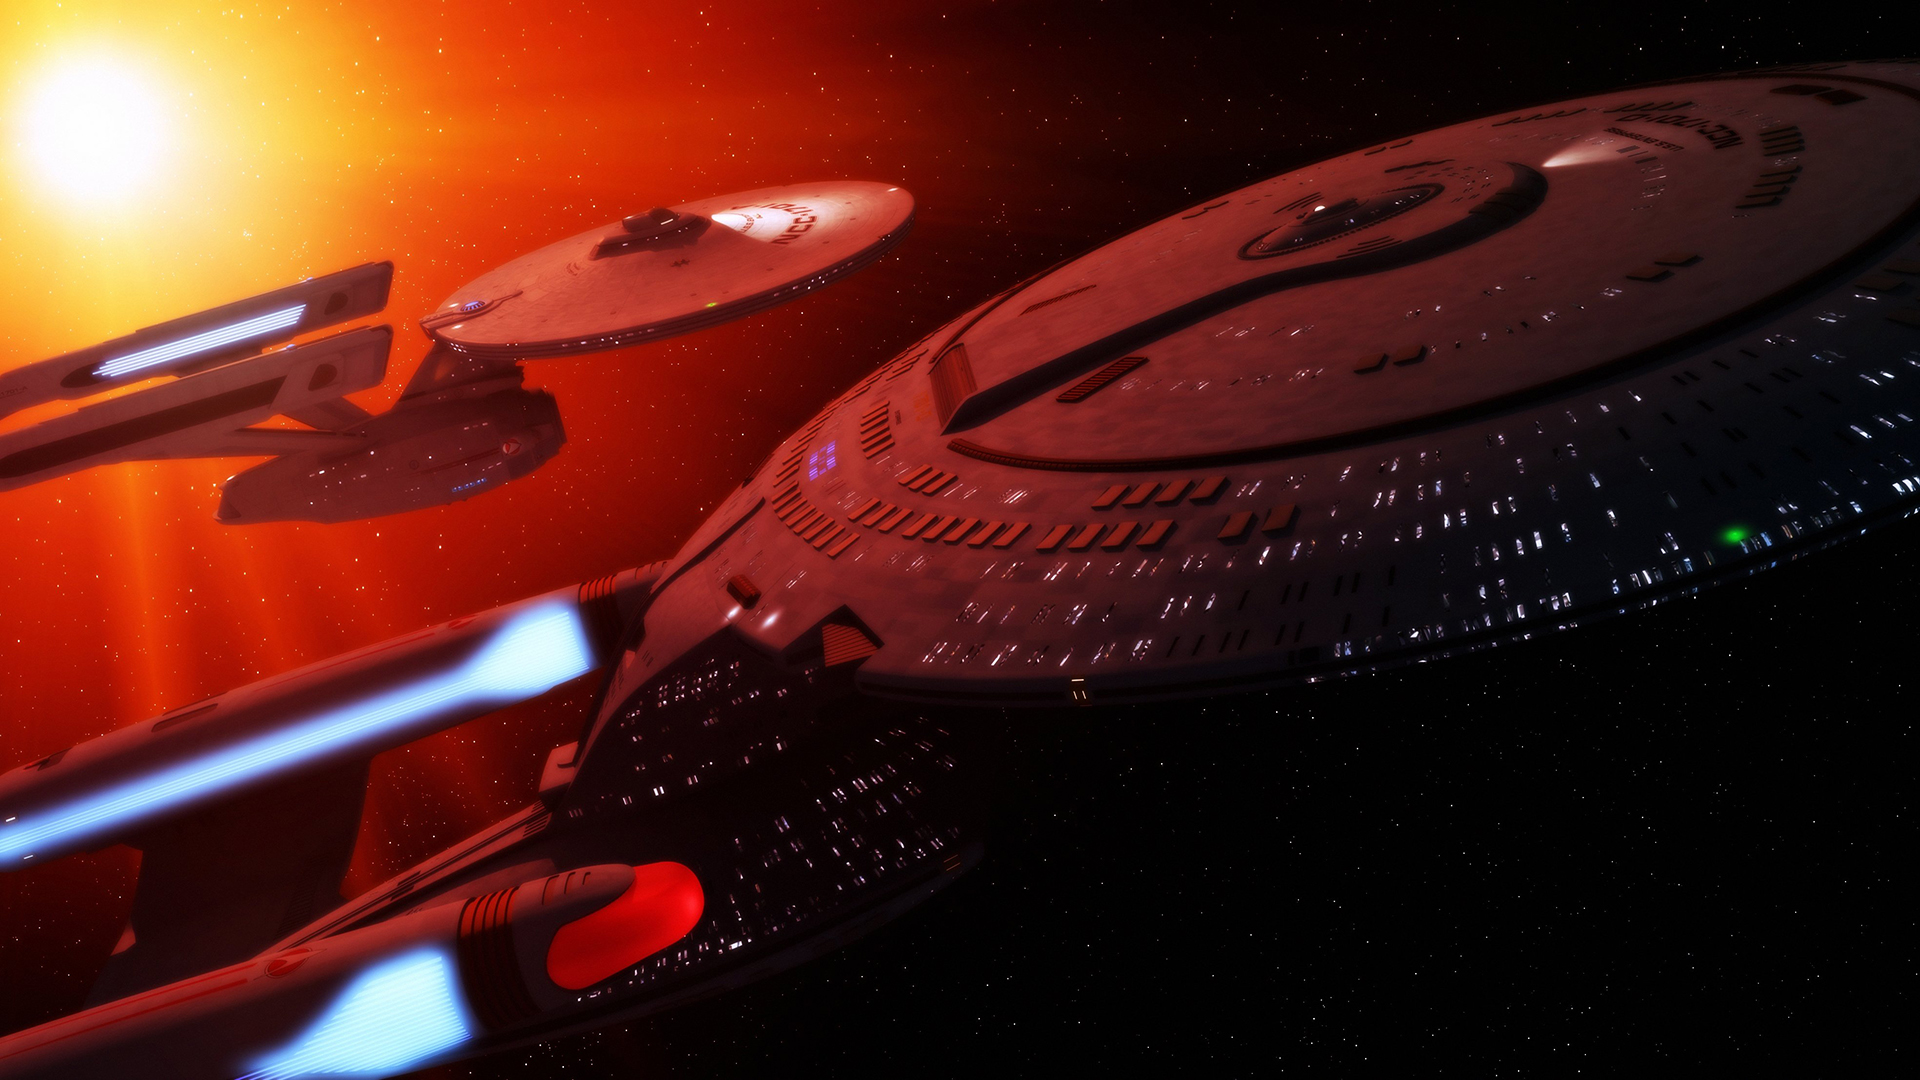 Starship Enterprise Spaceship Starlight Space Movies Sci Fi Wallpaper